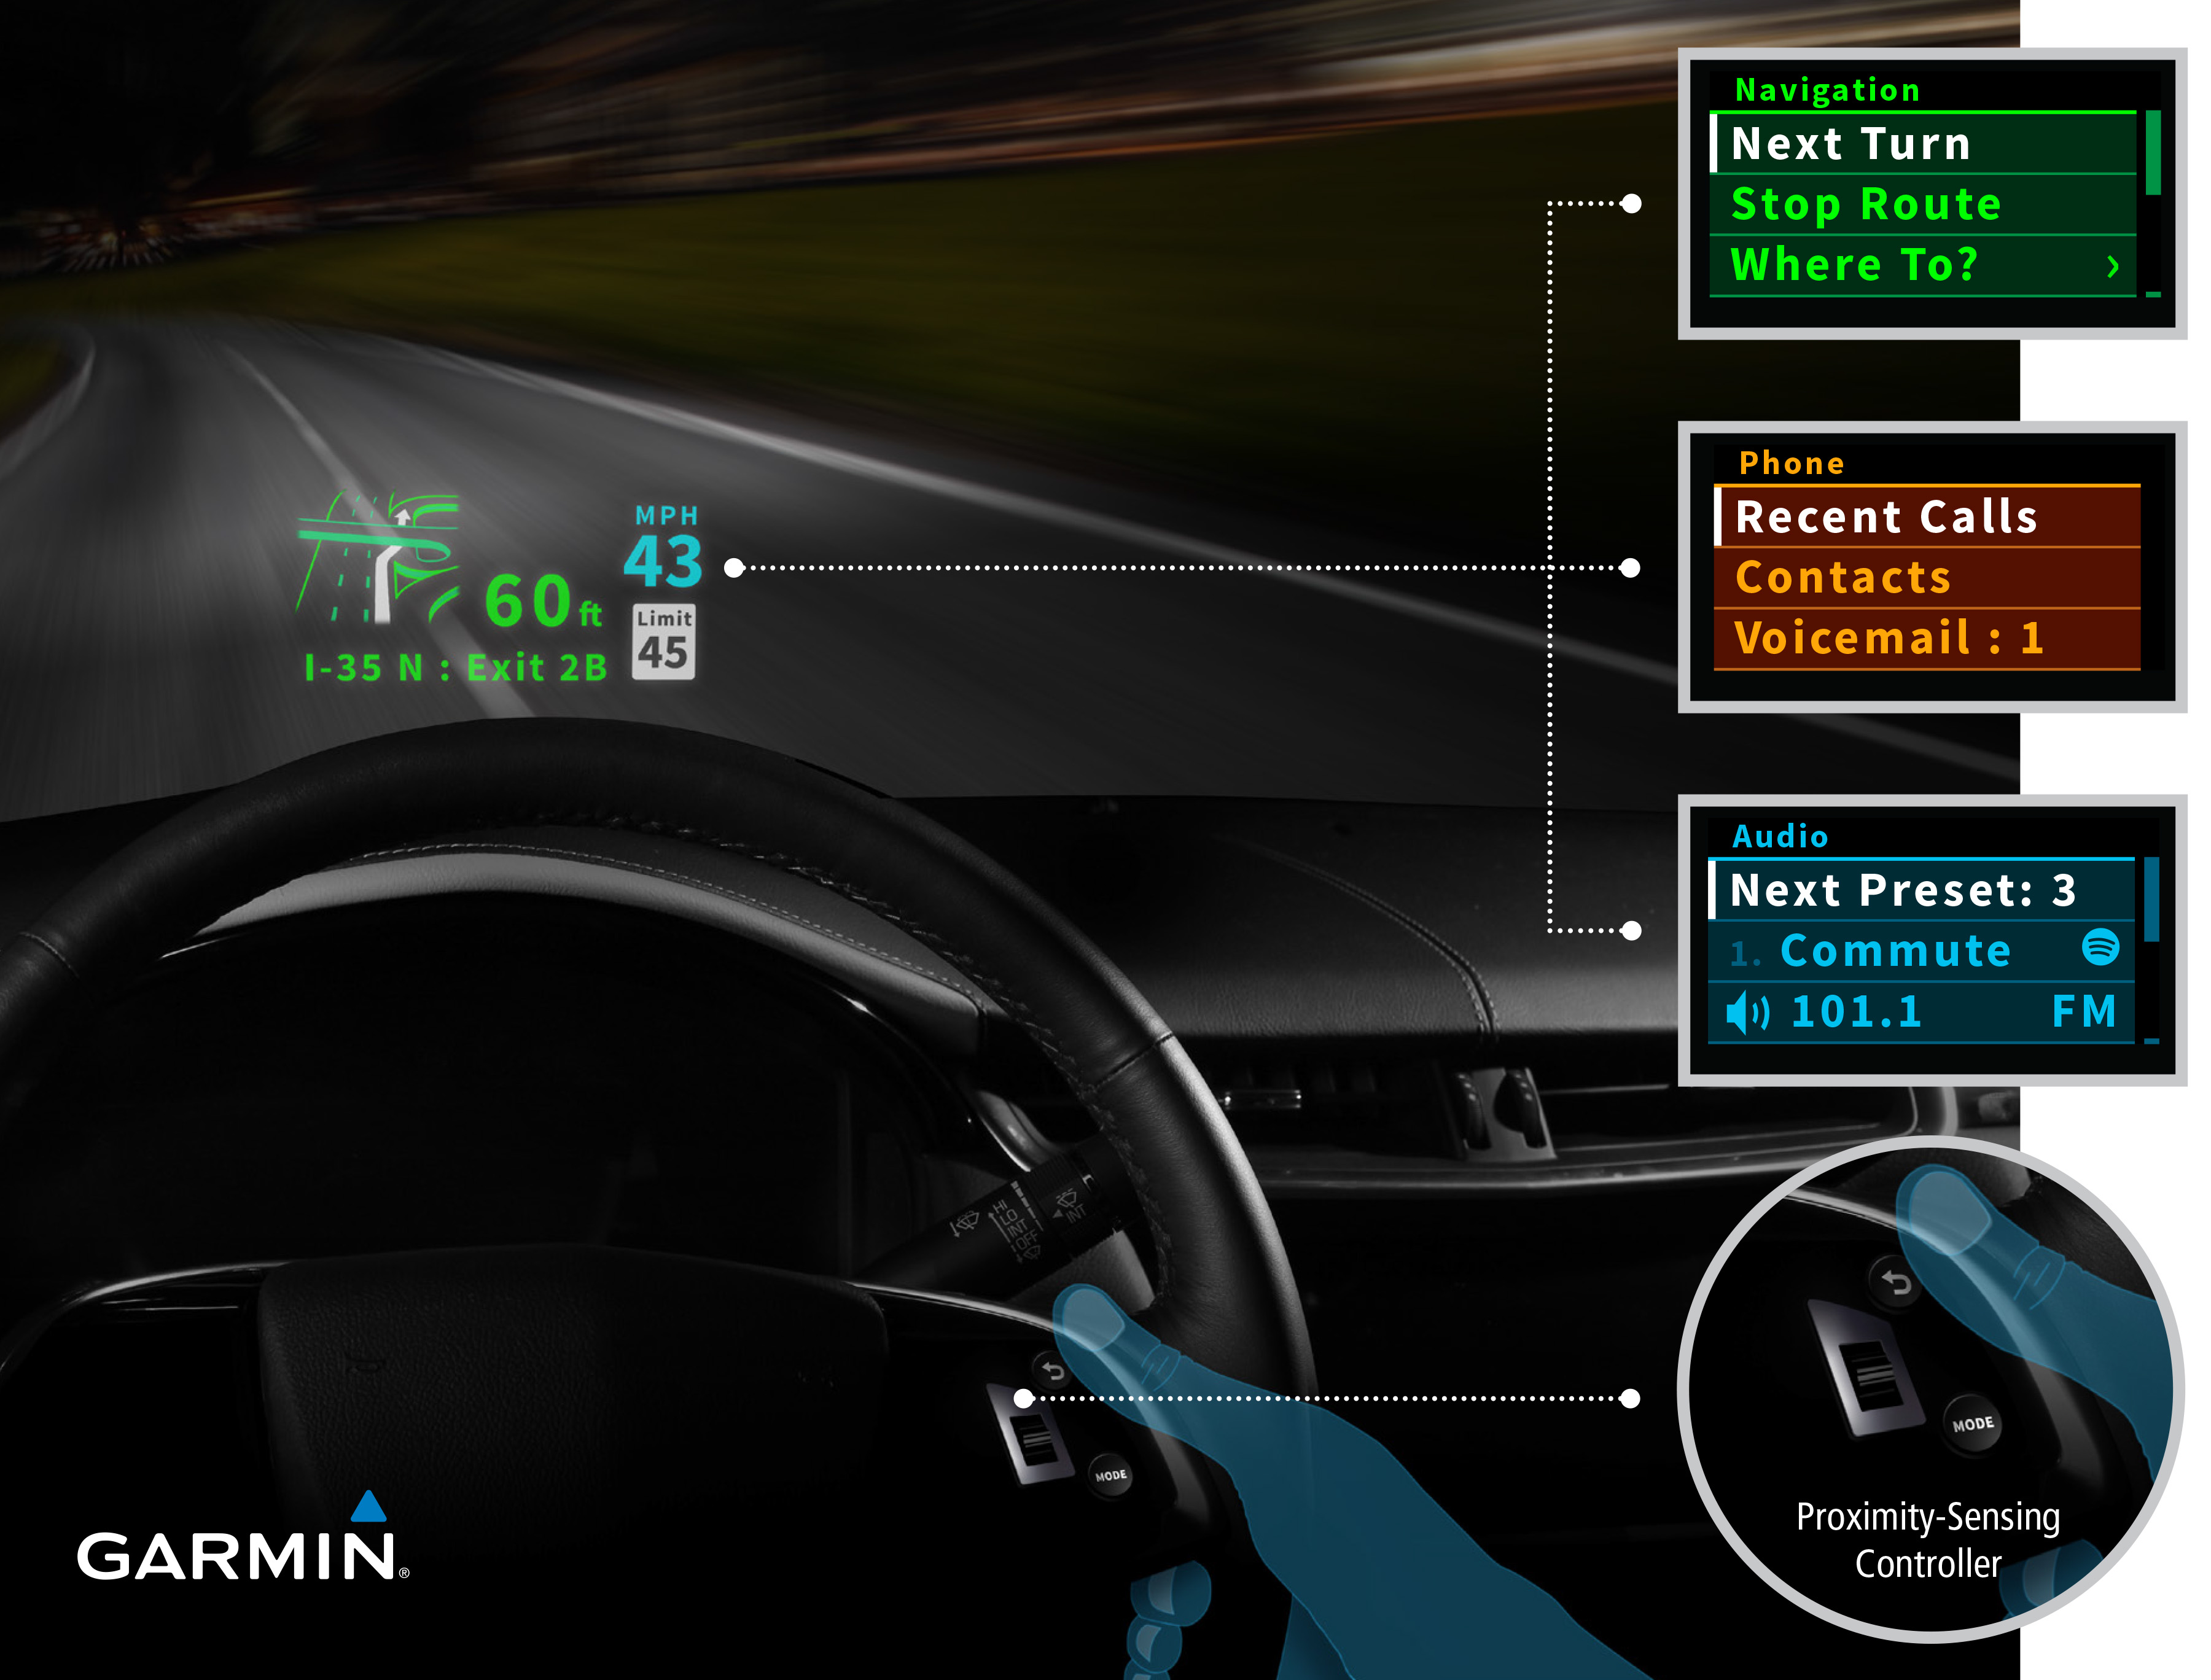 Garmin® Announces New Automotive Navigation Devices - Garmin Blog